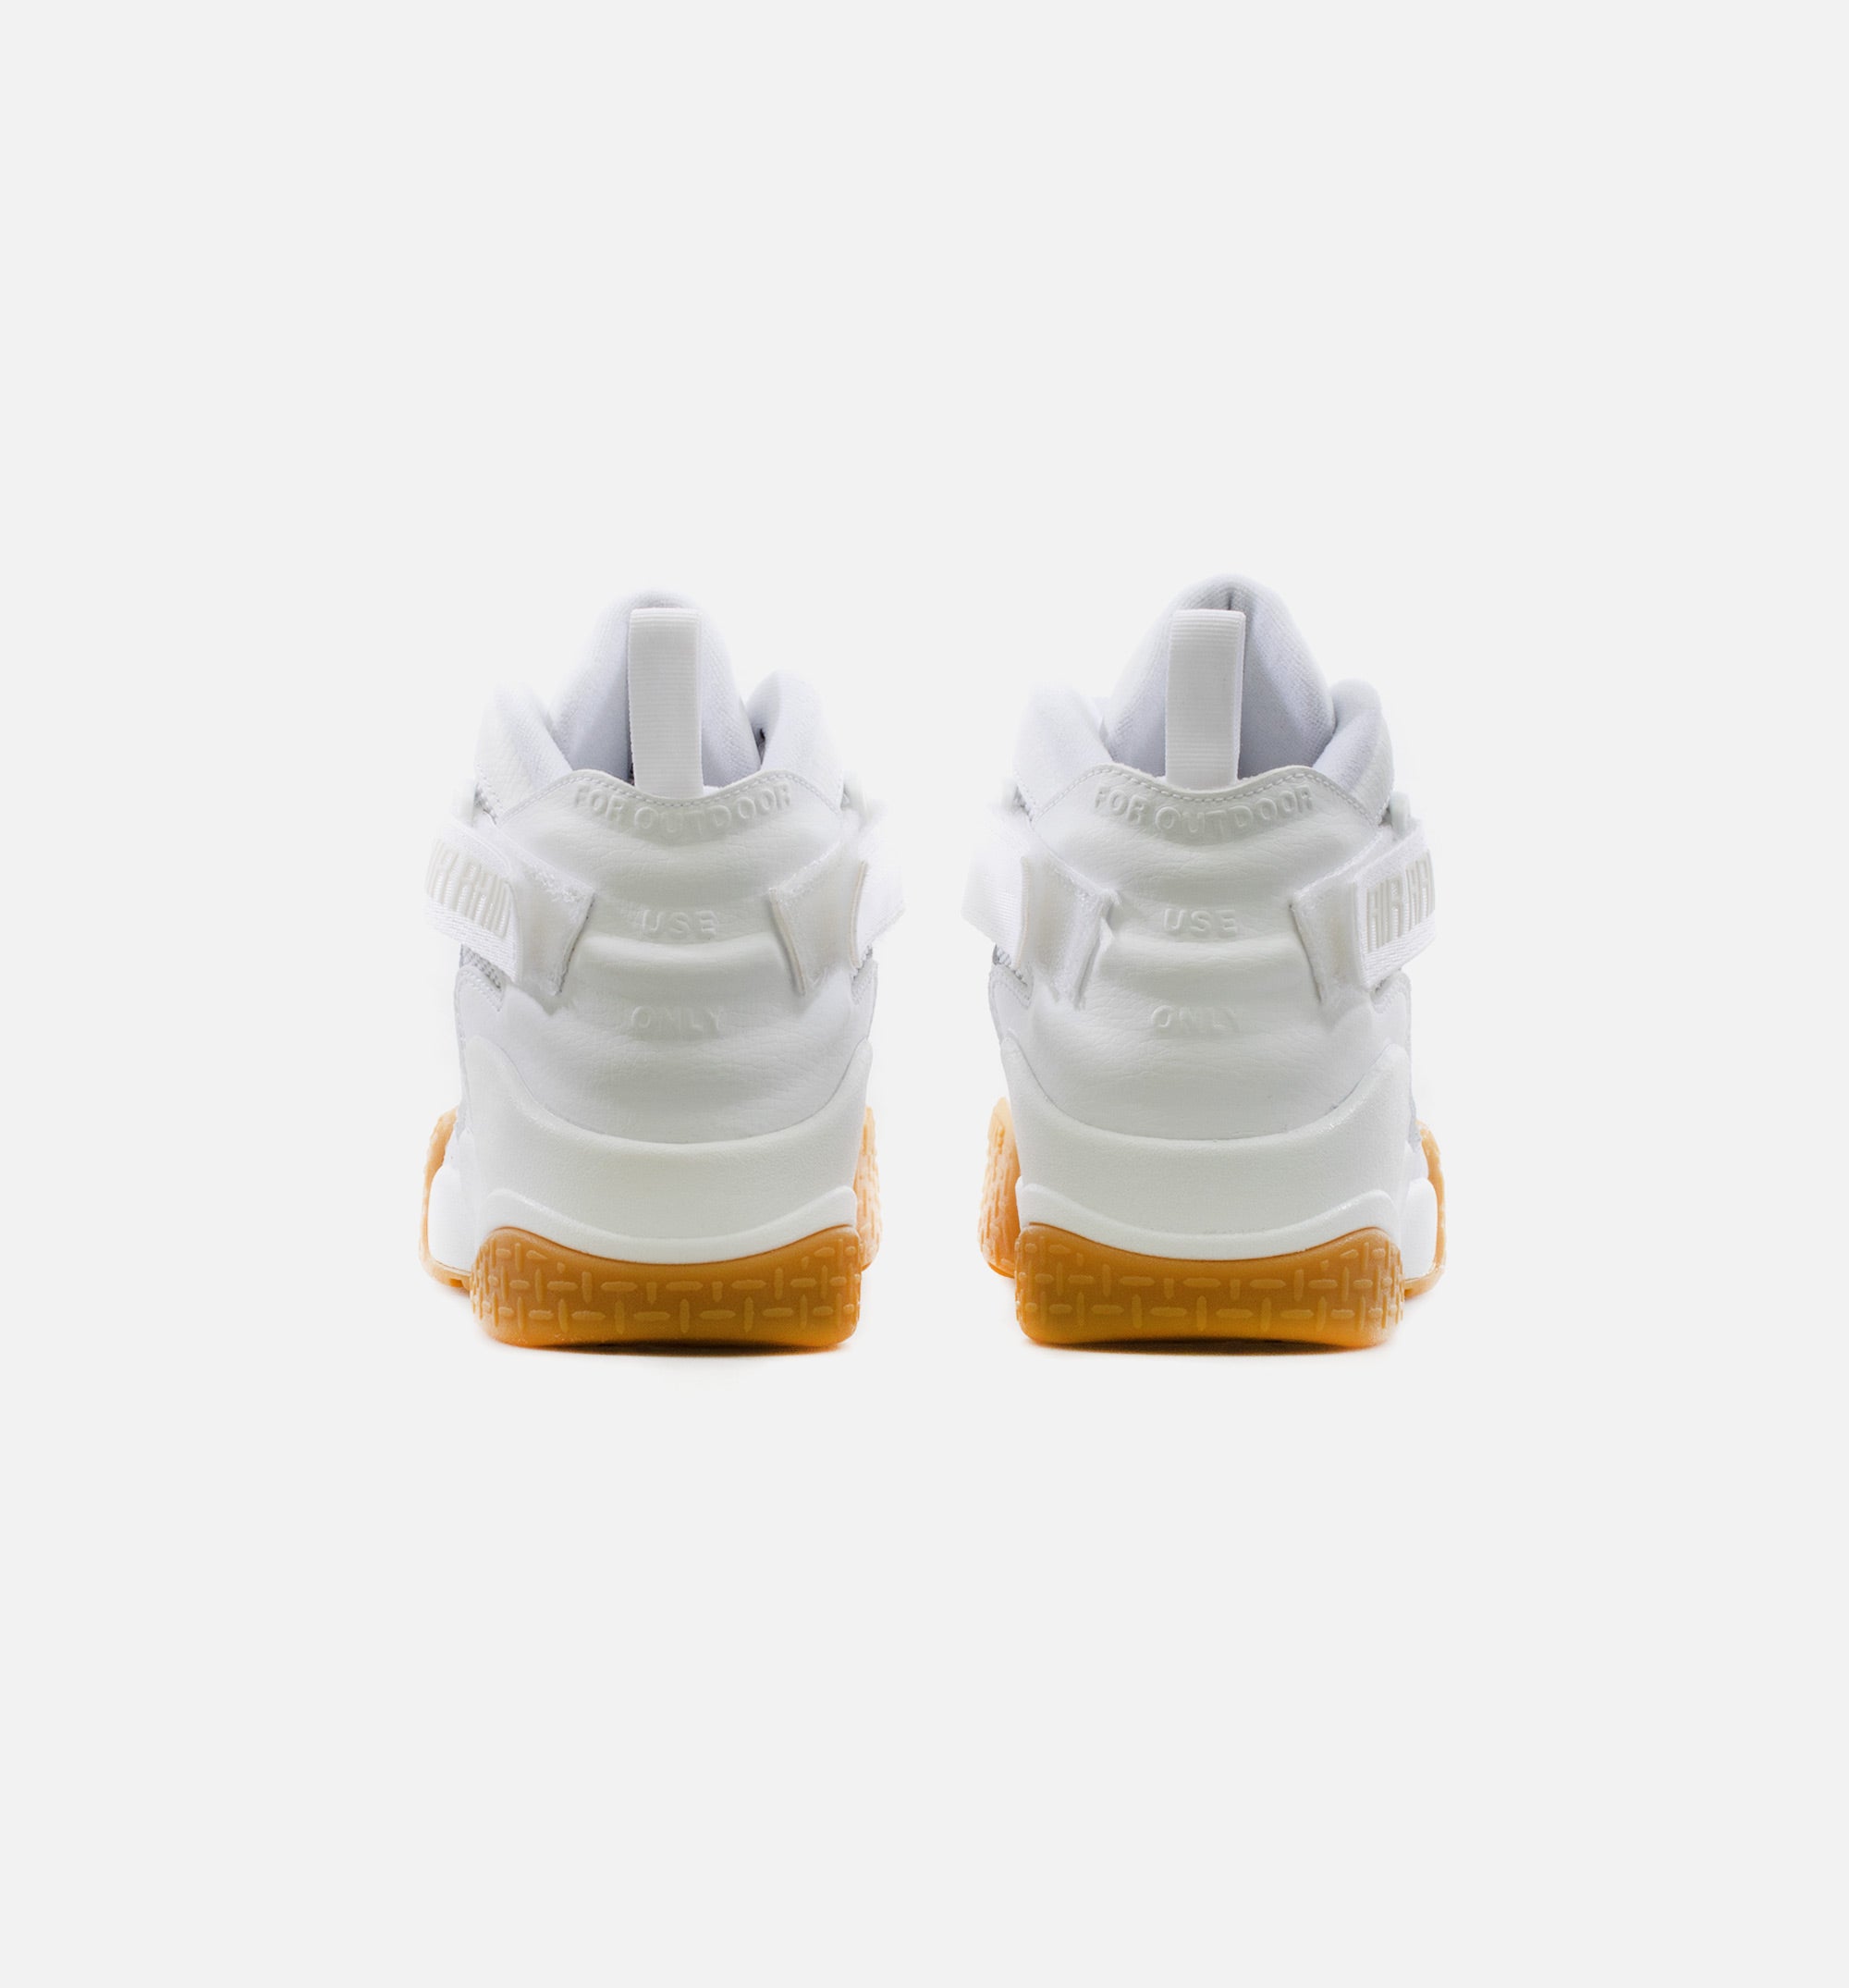 Nike DJ5974-100 Air Raid White Gum Mens Lifestle Shoe - White/Gum –